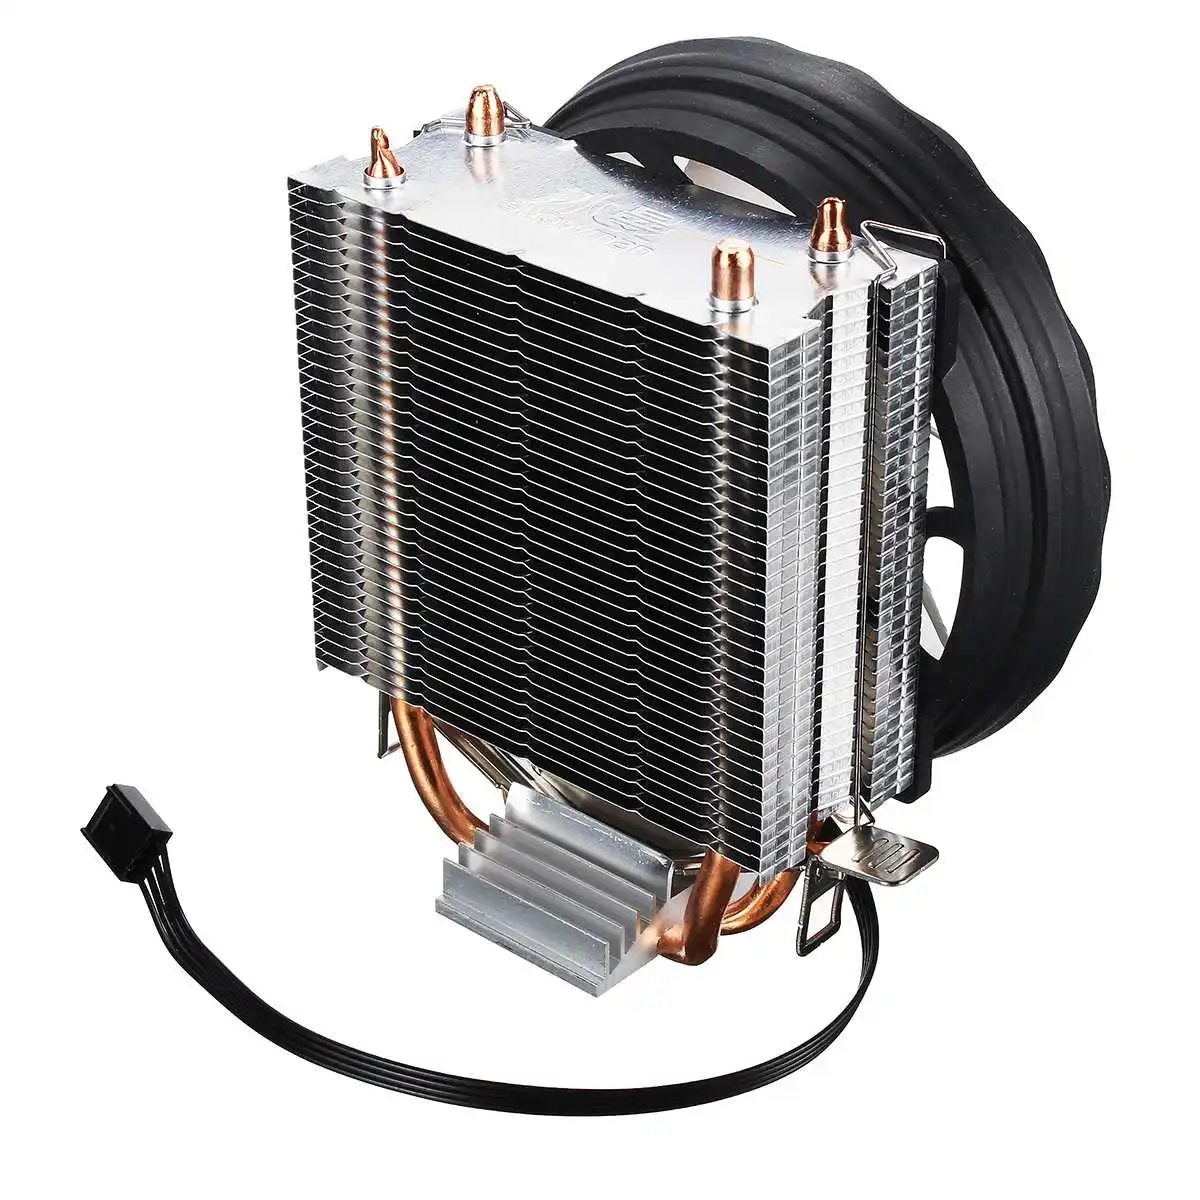 Тихий охлаждающий вентилятор Core светодиодный вентилятор охлаждения процессора радиатор 4pin кулер для процессора Intel Socket LGA 1156/1155/775 для AMD